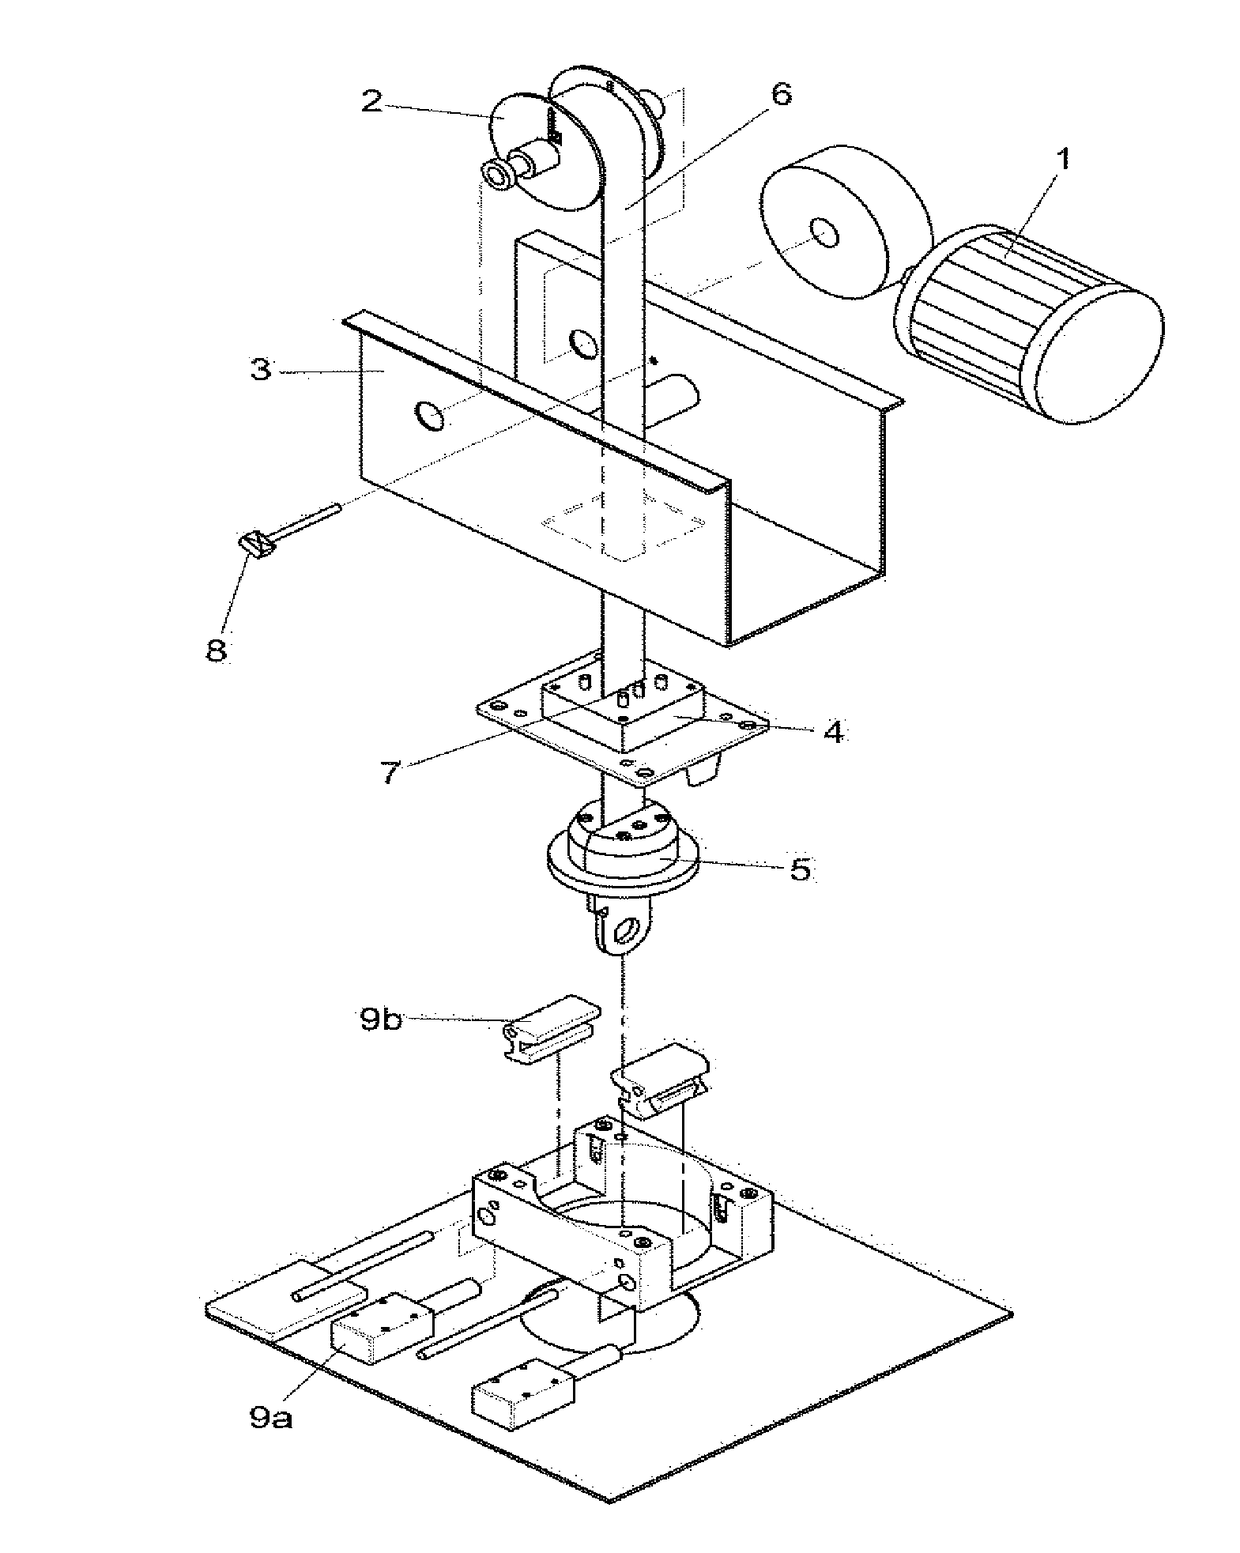 Auto-lift apparatus for CCTV camera maintenance